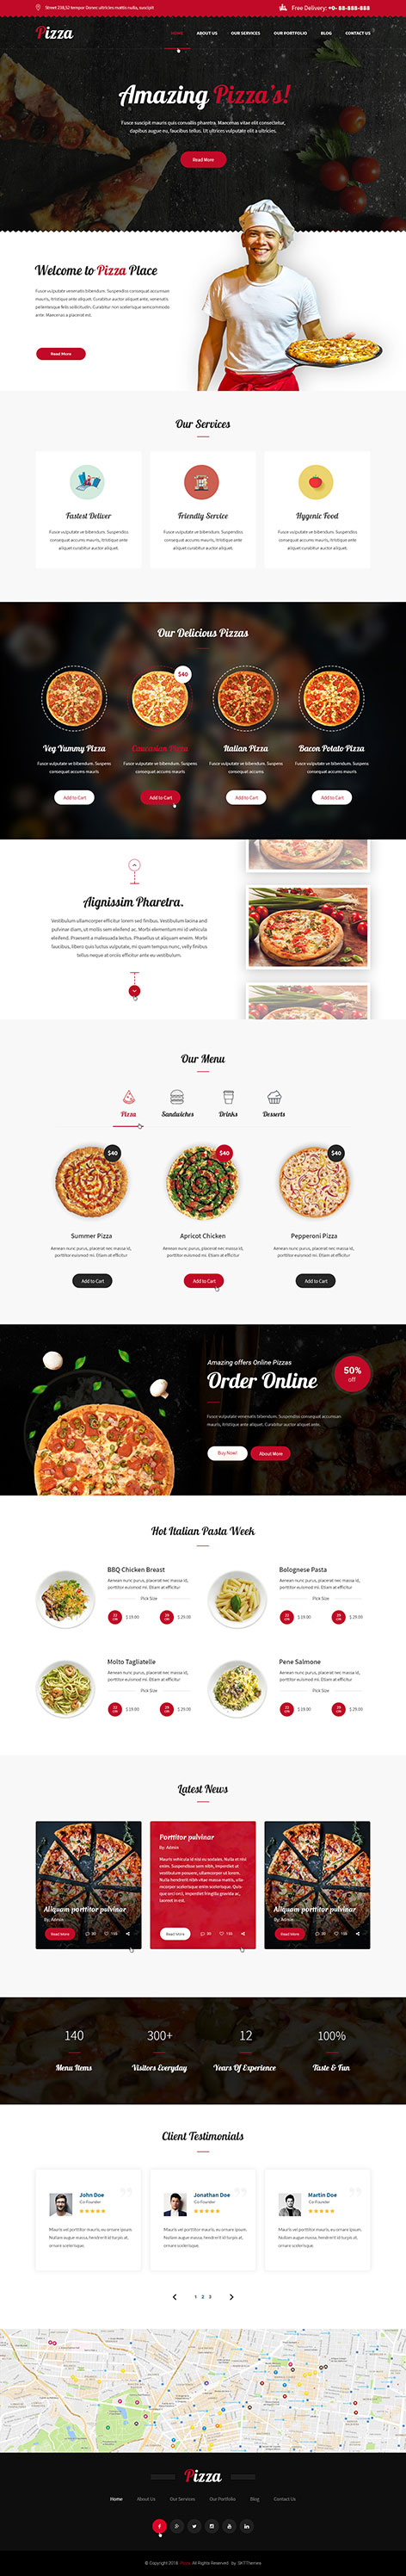 pizza-ordering-WordPress-theme1.jpg